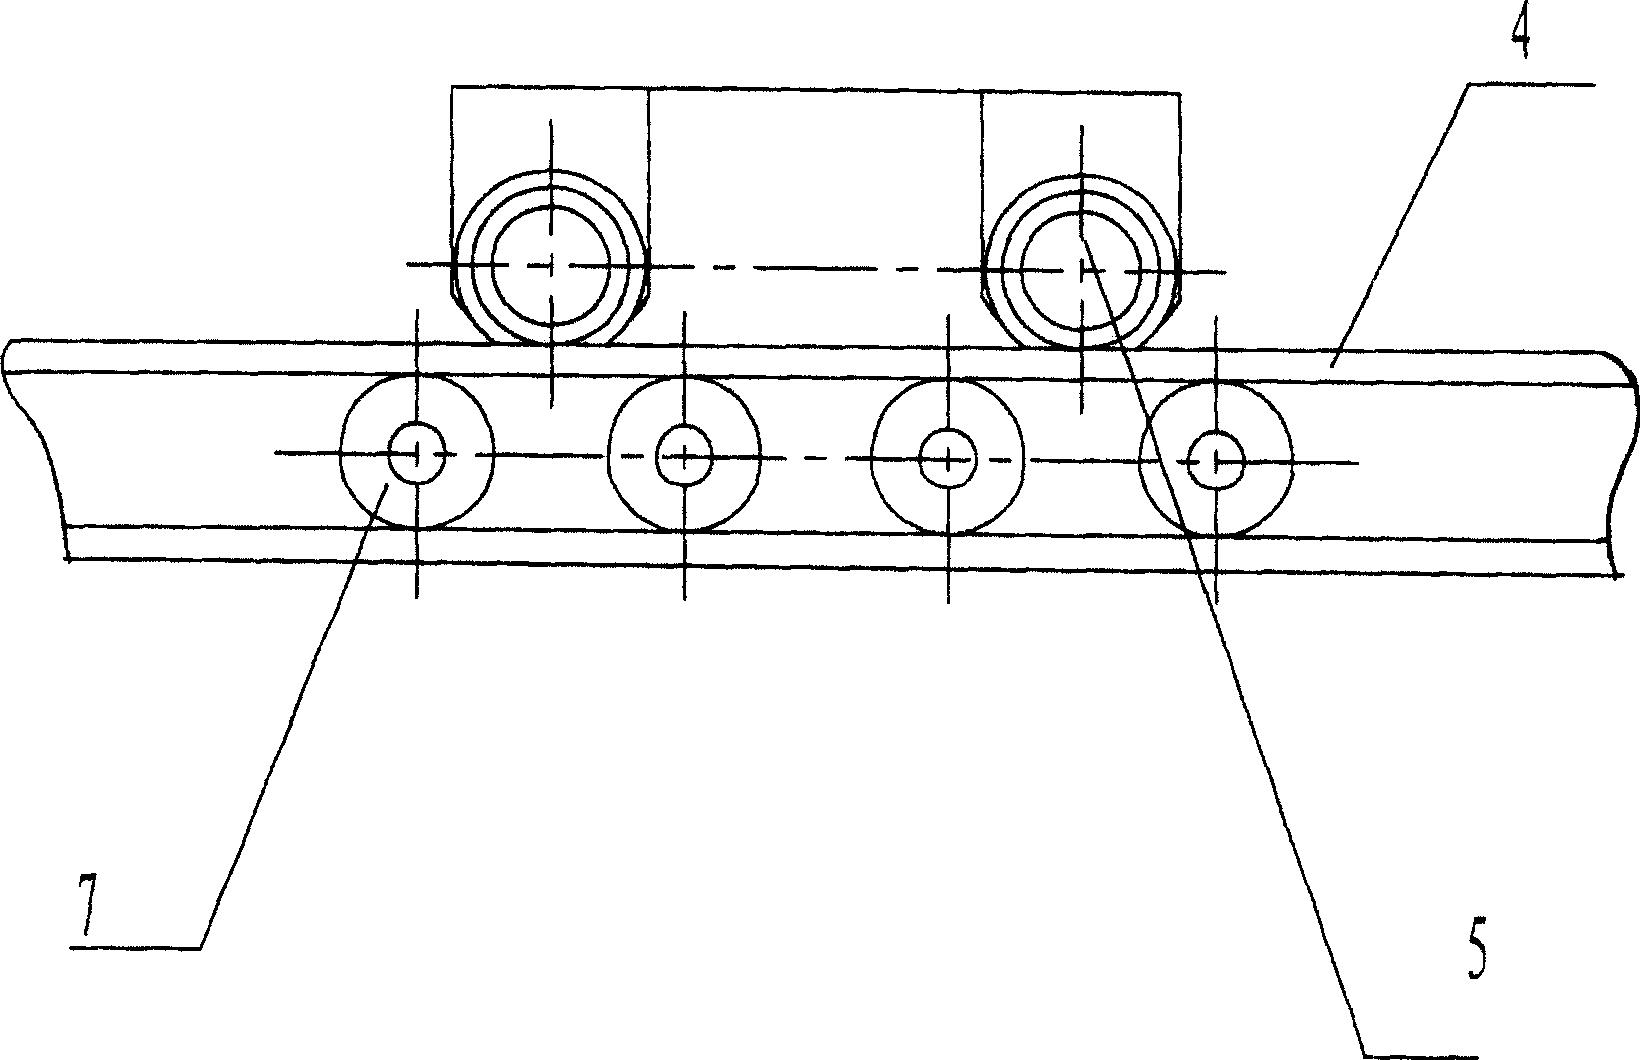 Spindle transmission mechanism of trestle-conveying-type spinning machine